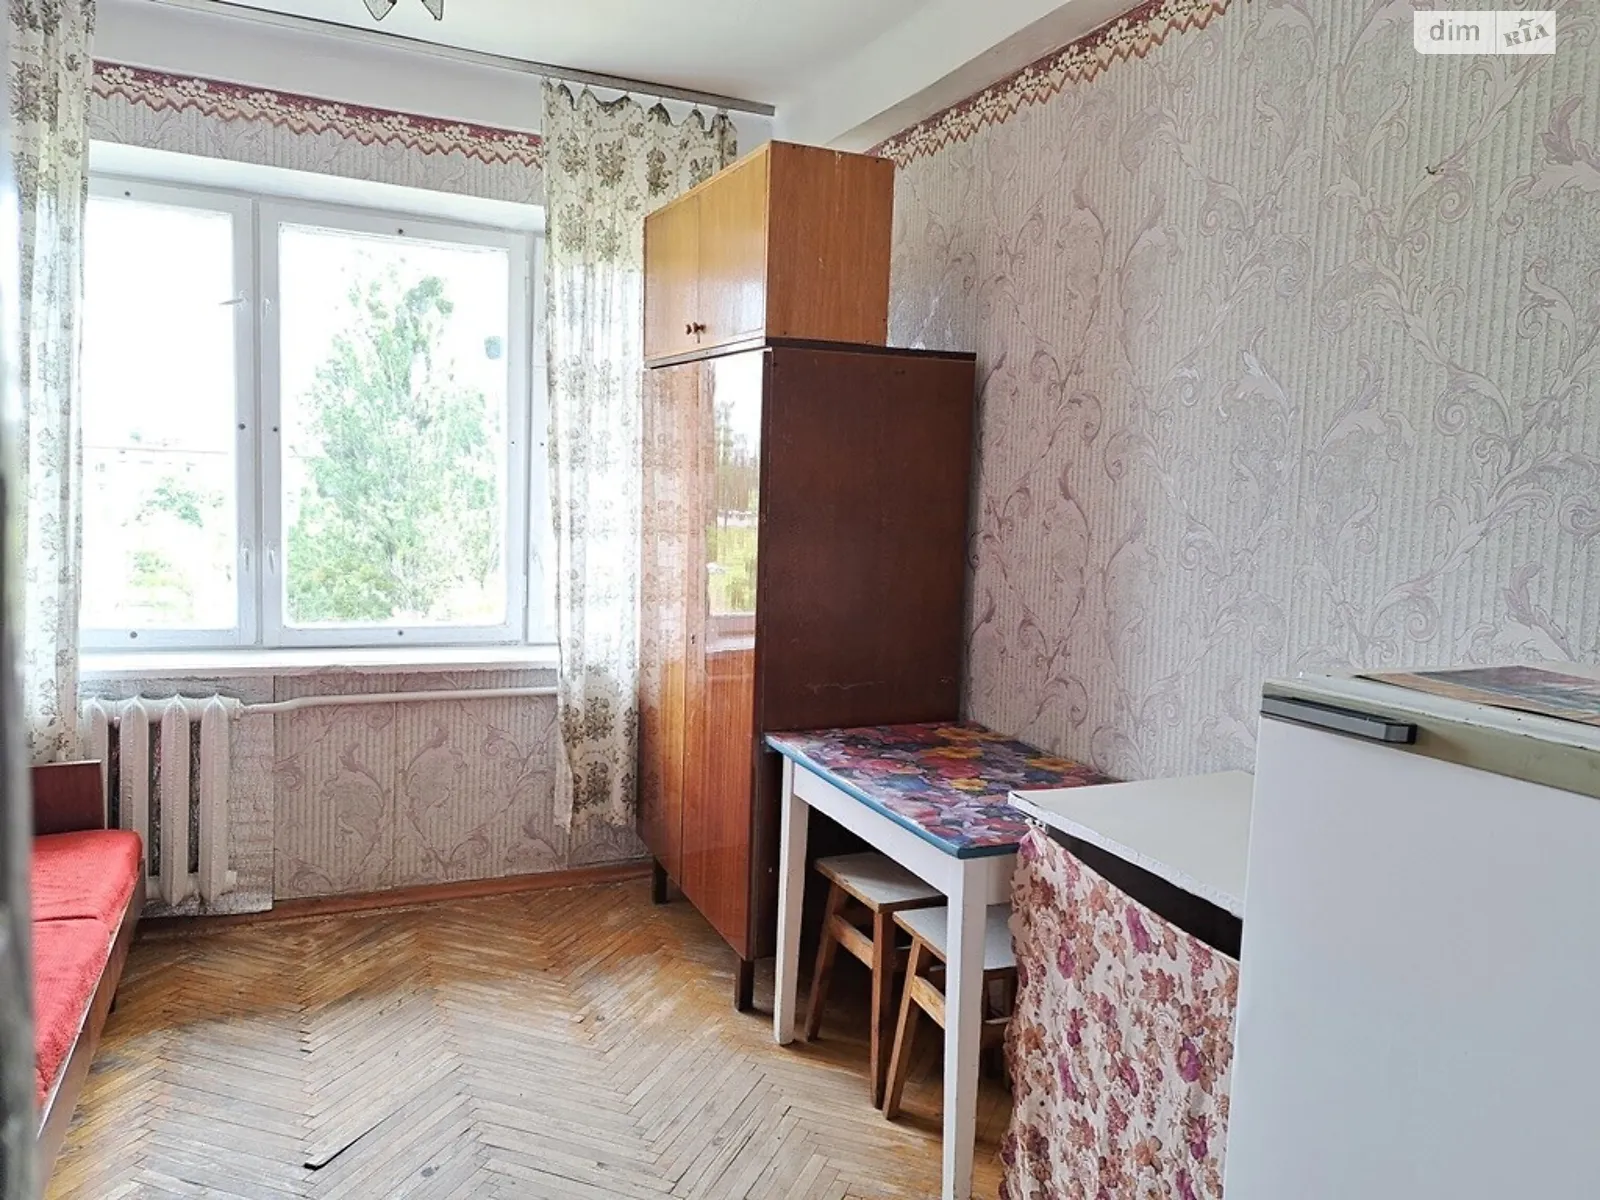 Продается комната 17 кв. м в Киеве, цена: 9900 $ - фото 1